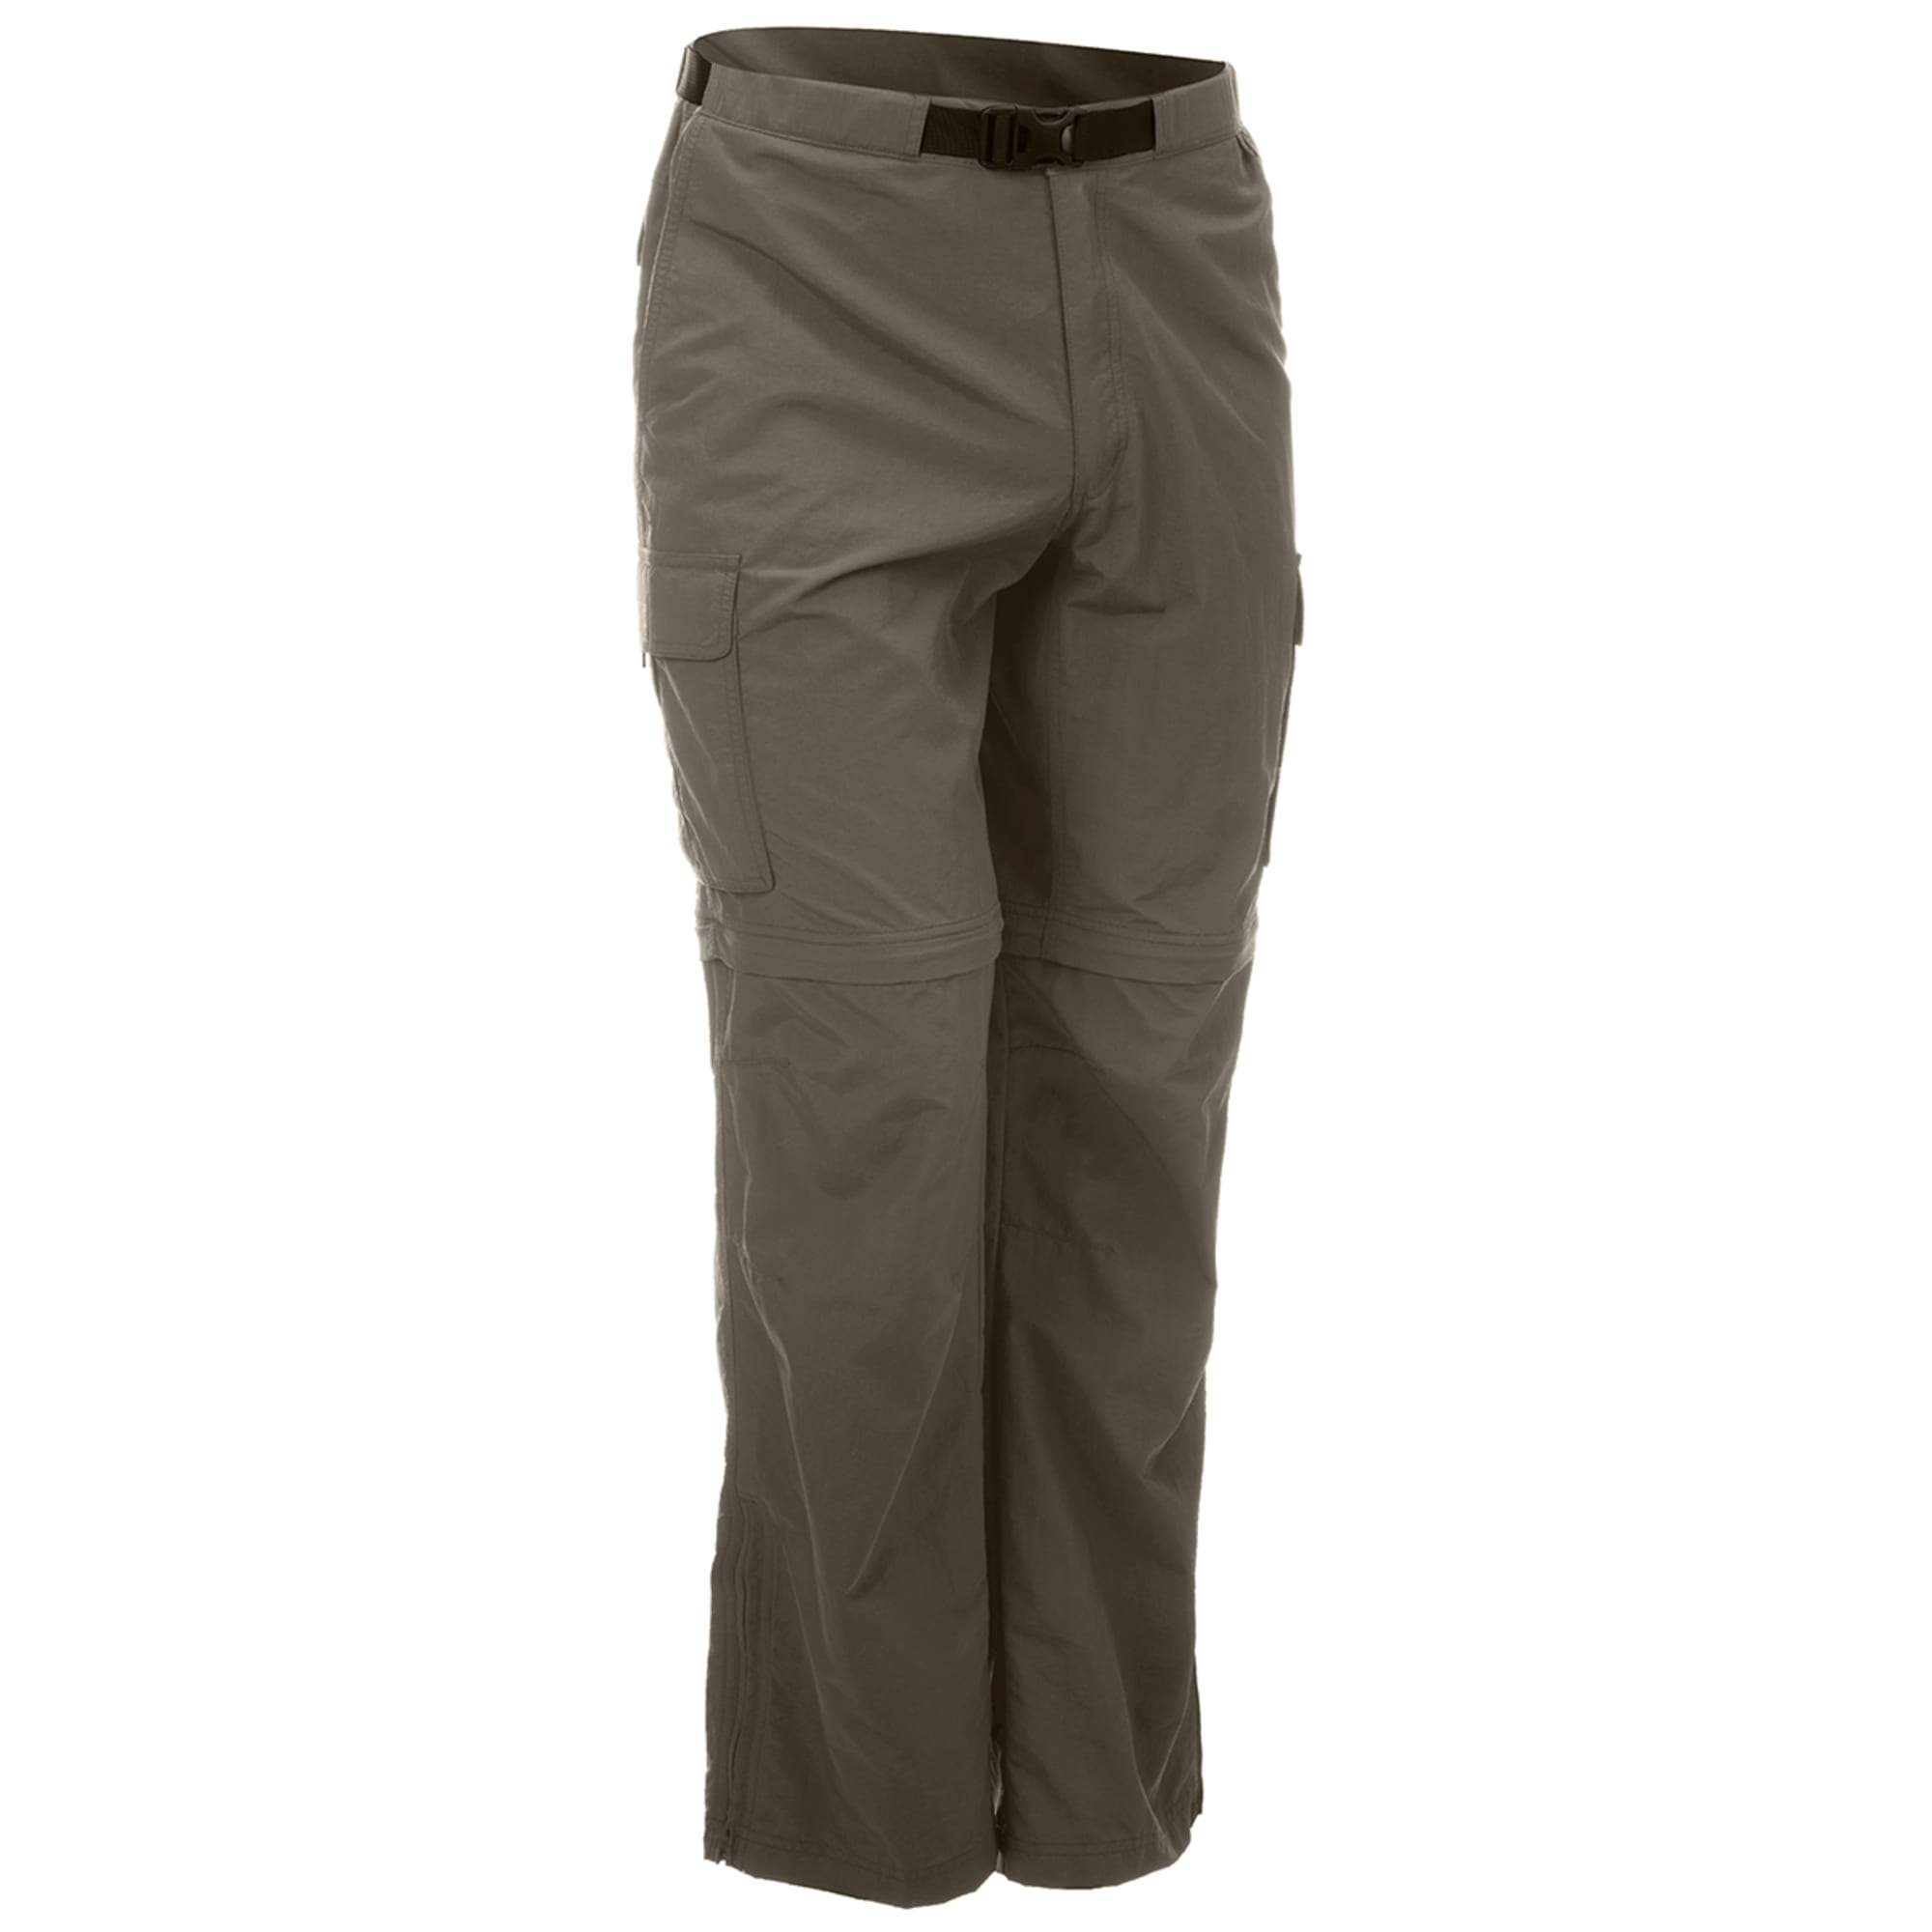 eastern mountain sports hiking pants, shorts zipper - Depop